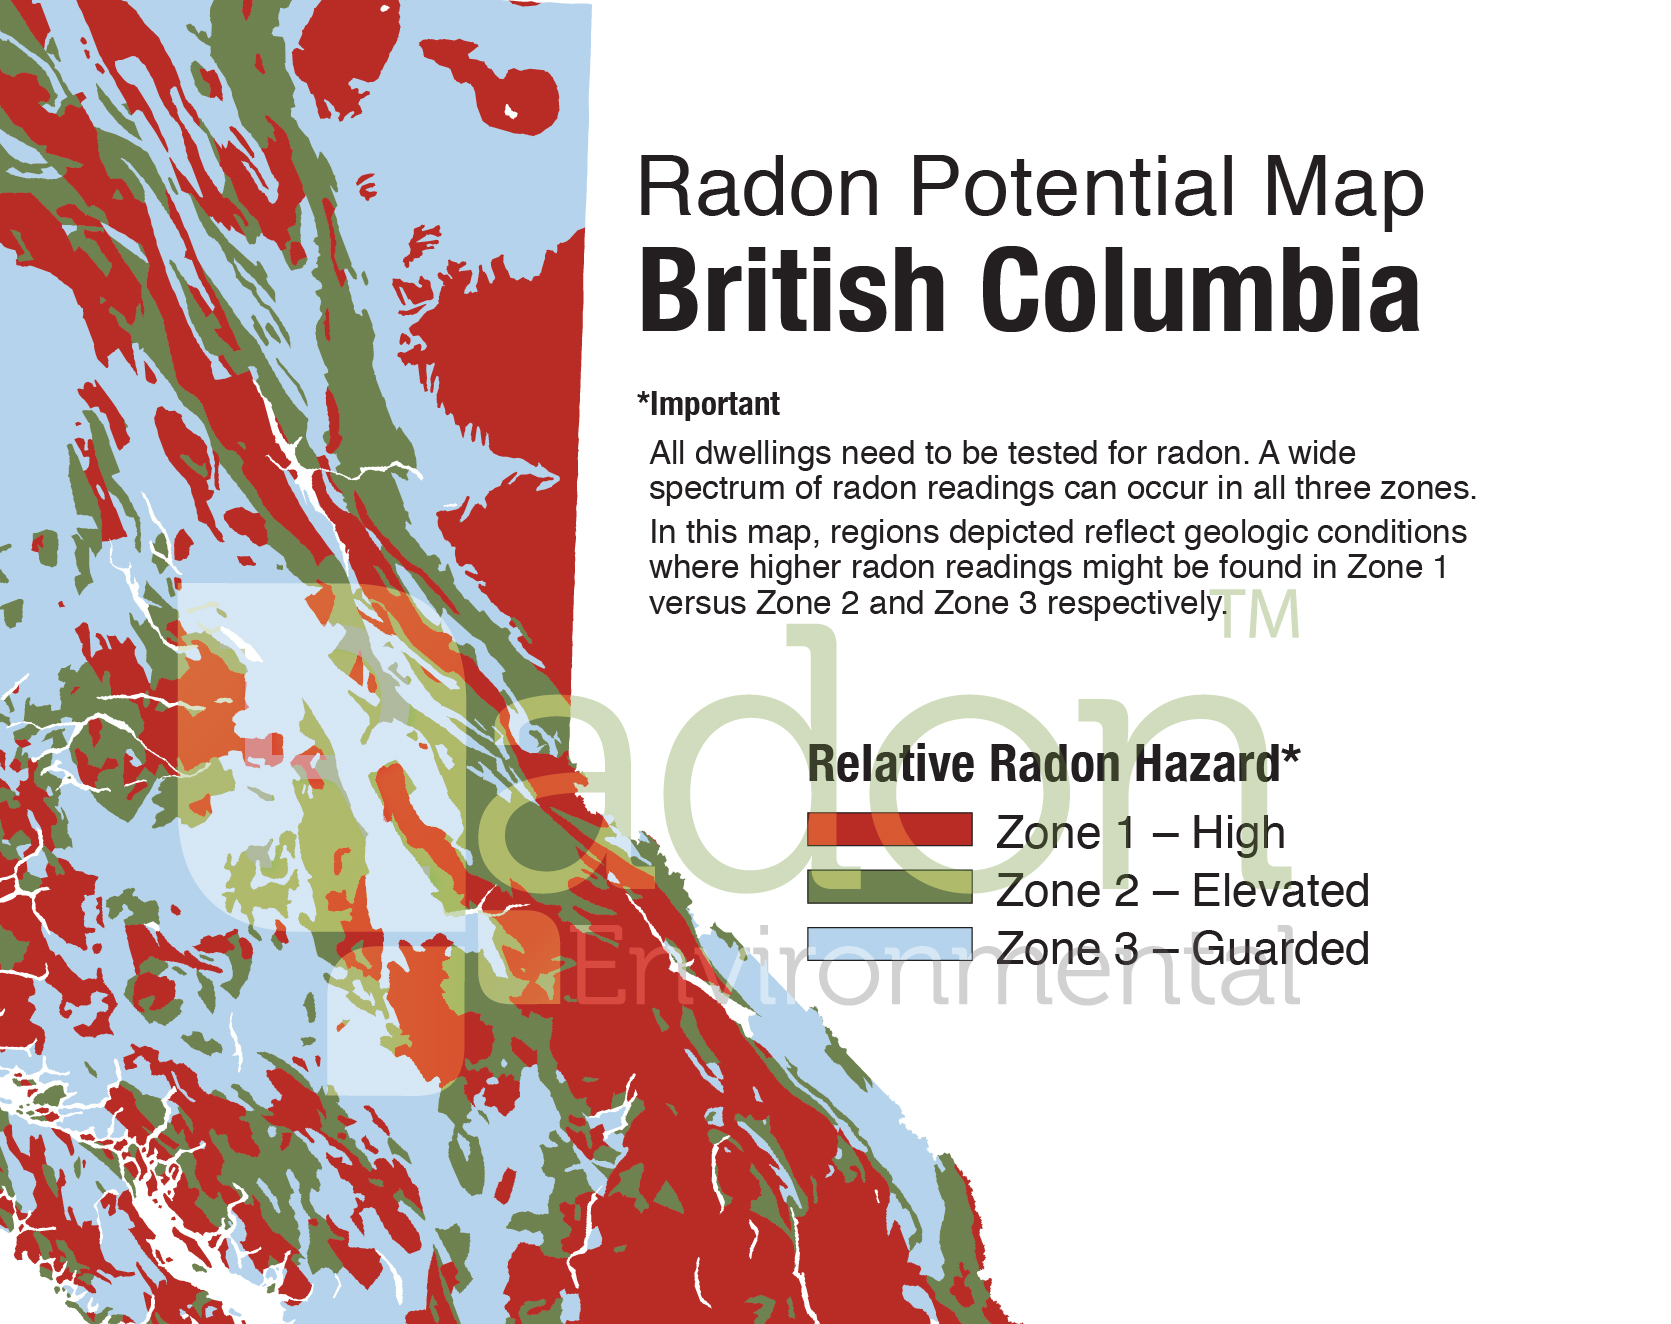 Radon Potential Map of BC.